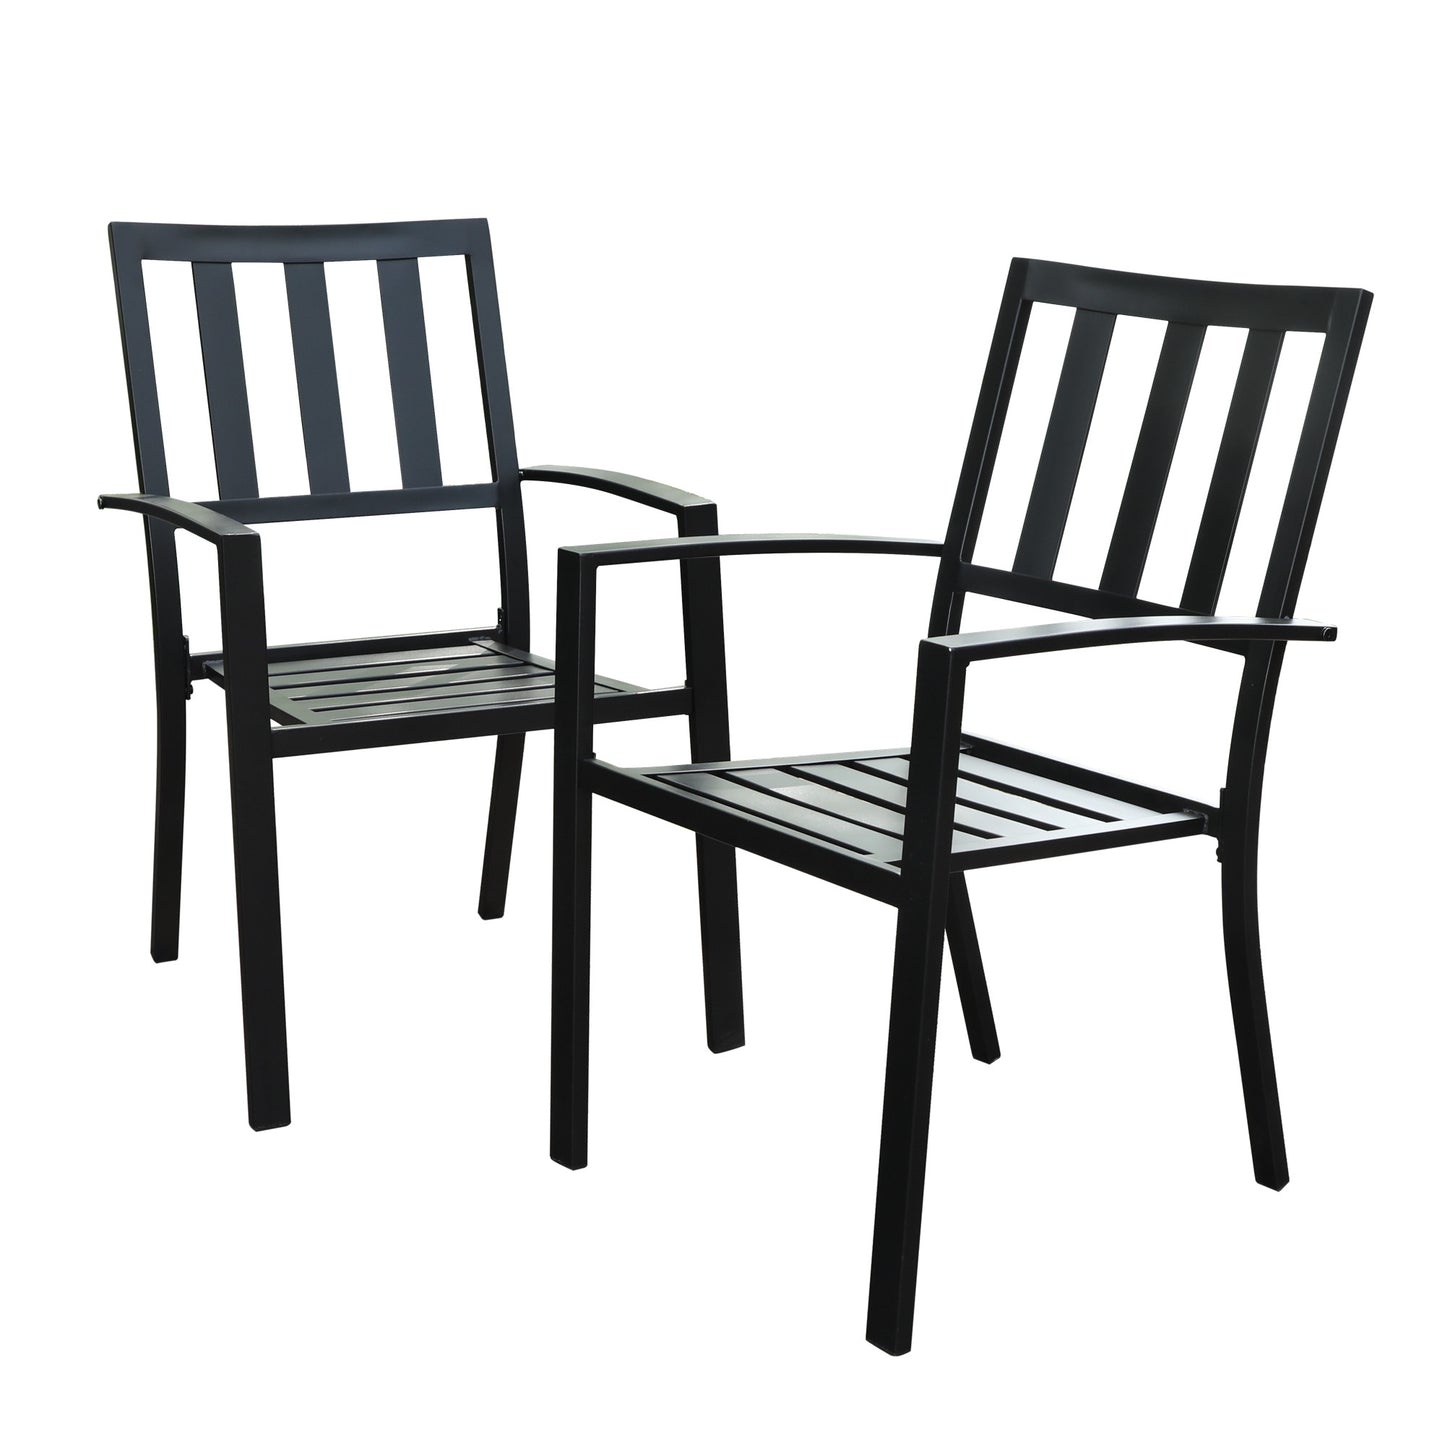 Sophia & William Metal Outdoor Patio Dining Chair Set of 2 in Black